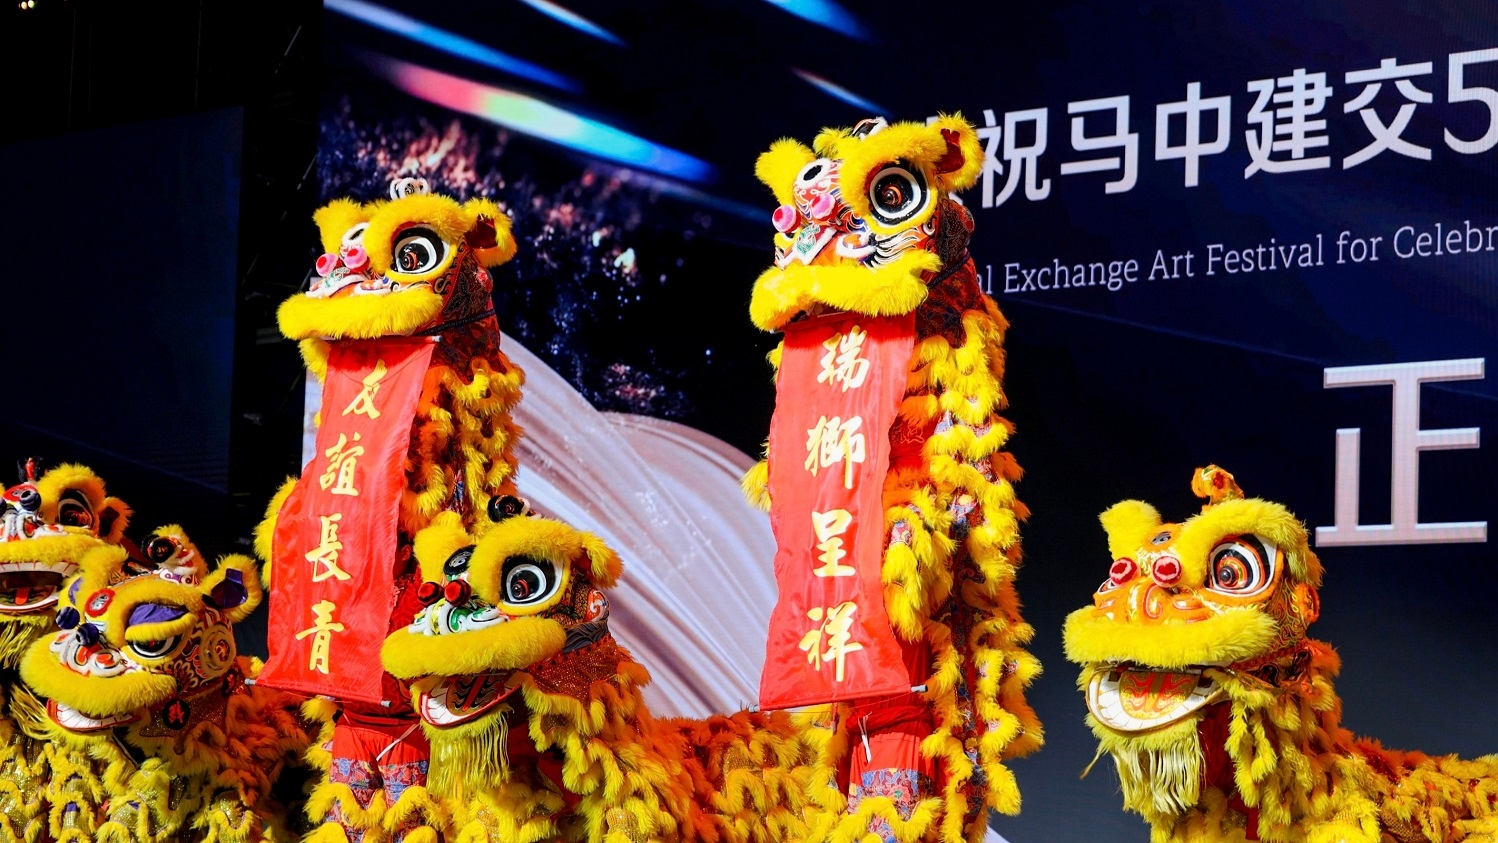 The lion dance from Qiaotou, Shenzhen, performs in Kuala Lumpur